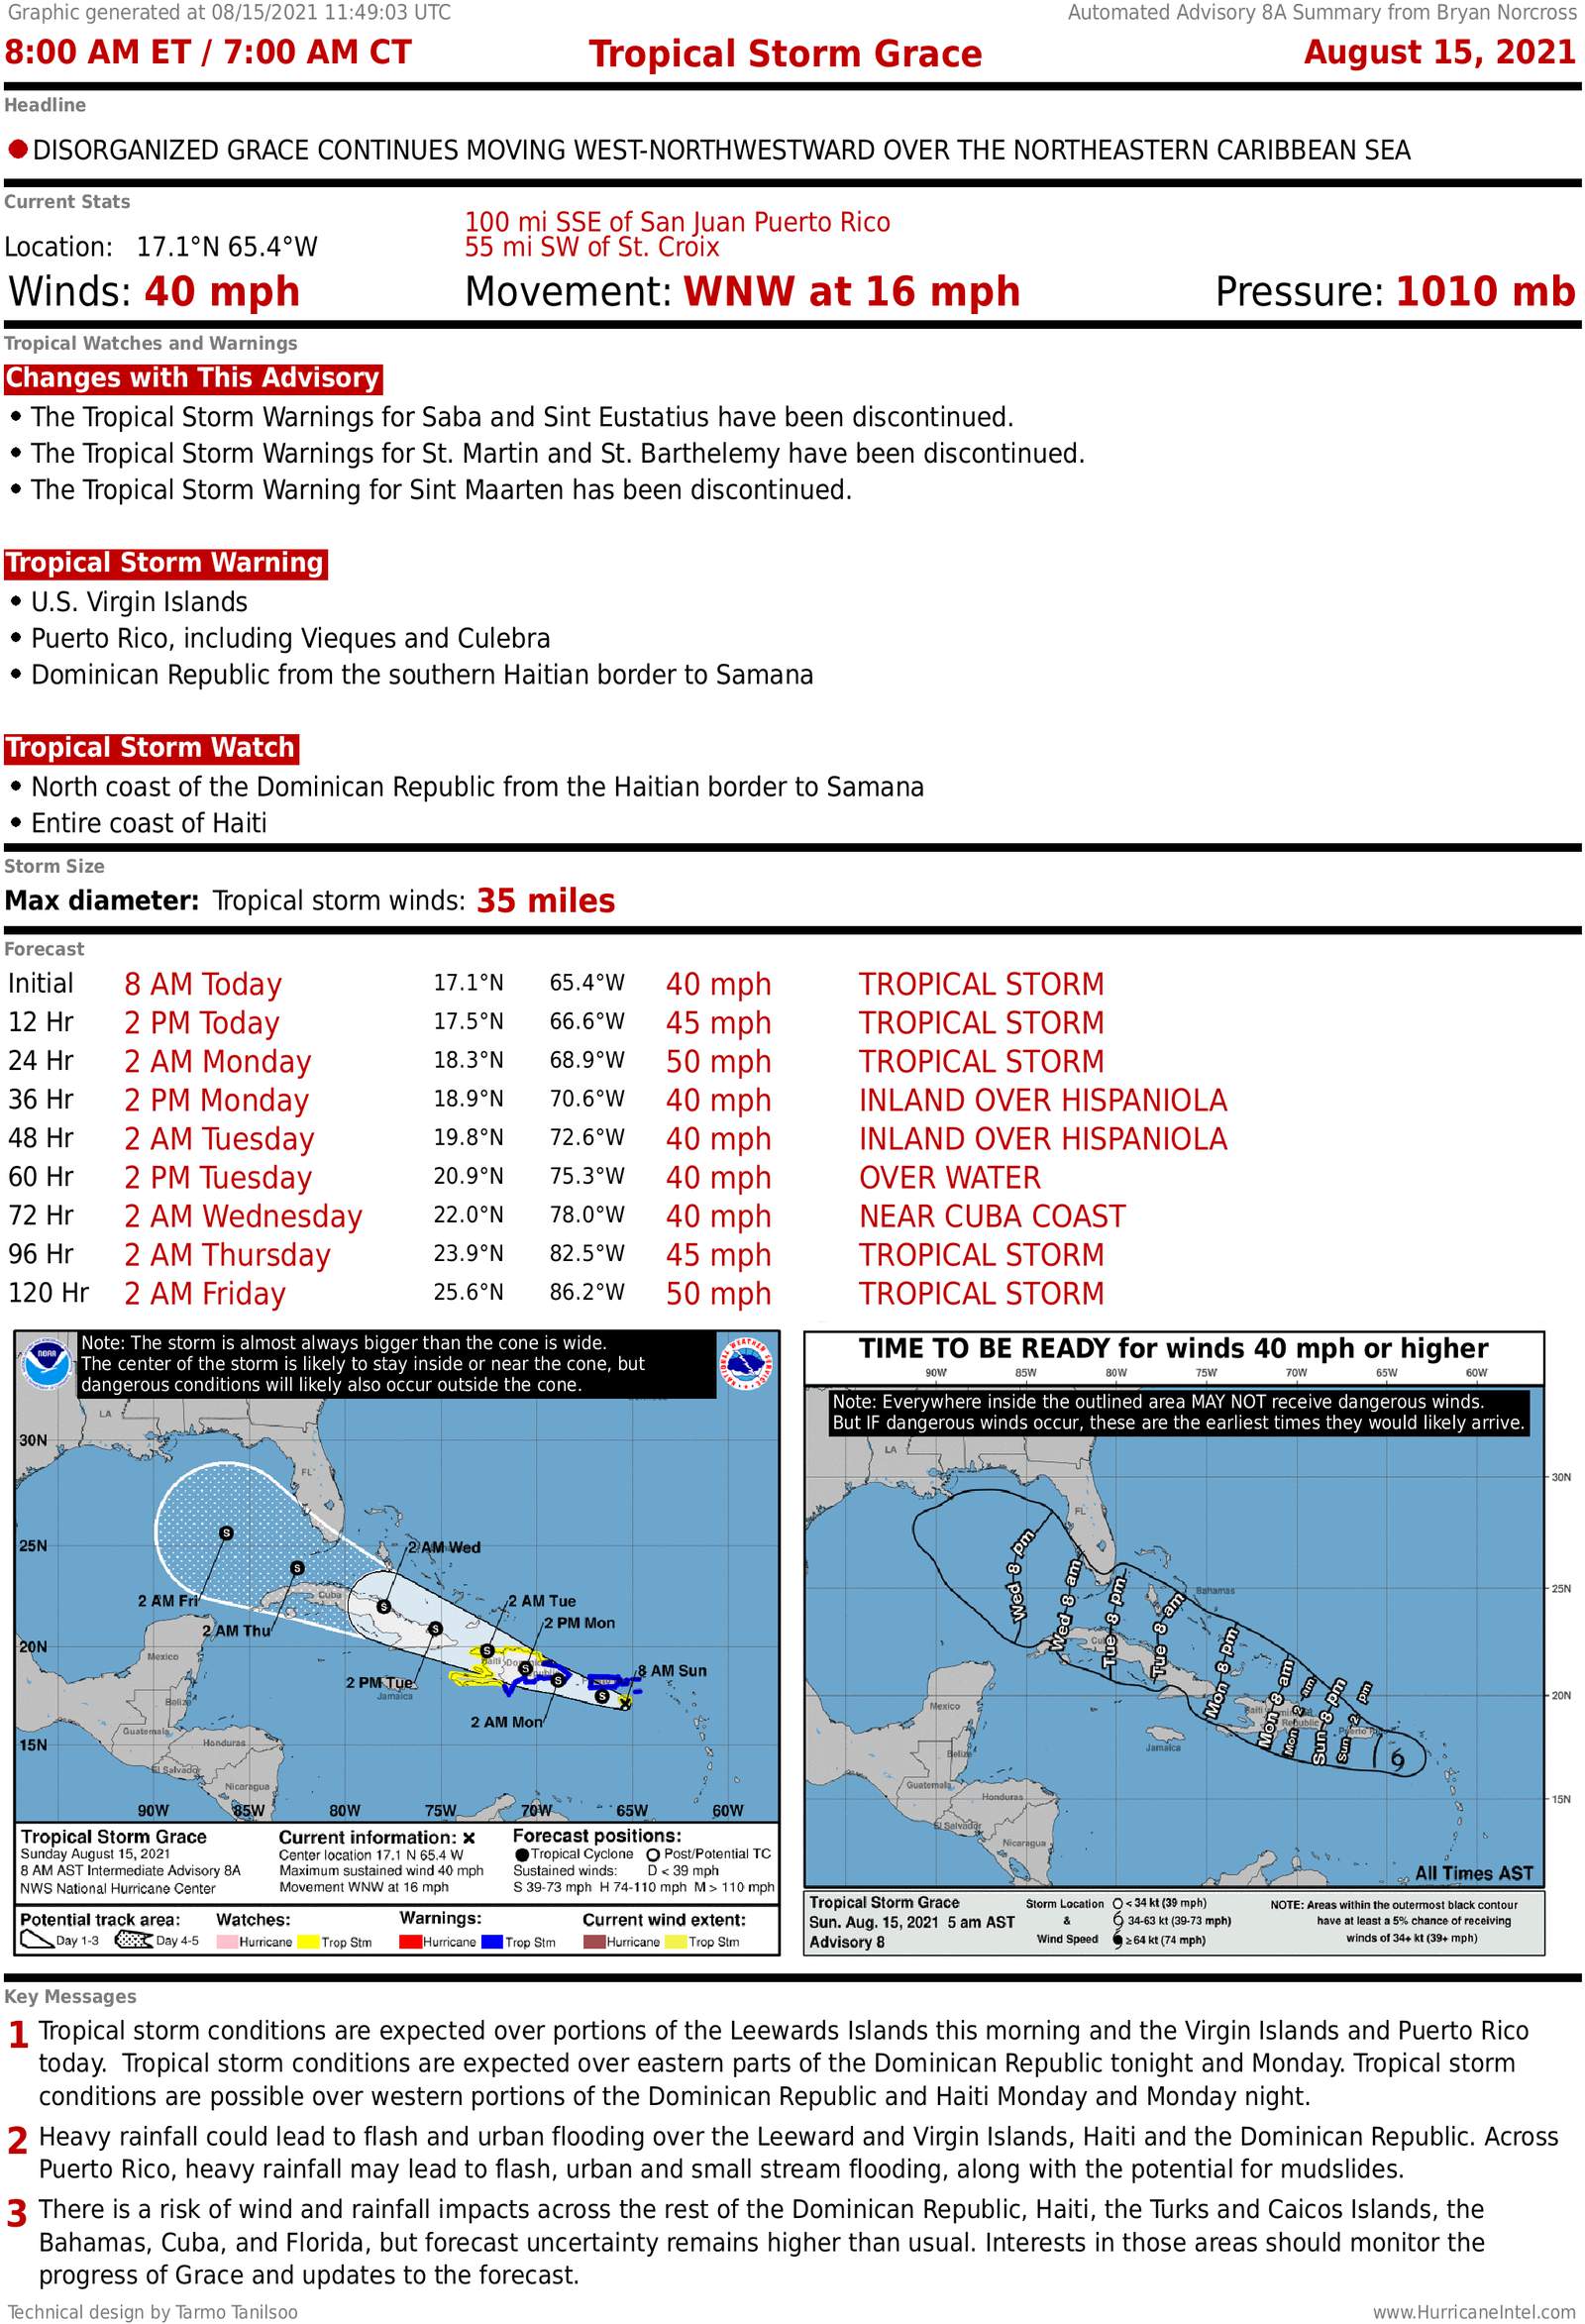 Tropical Storm Grace advisory summary